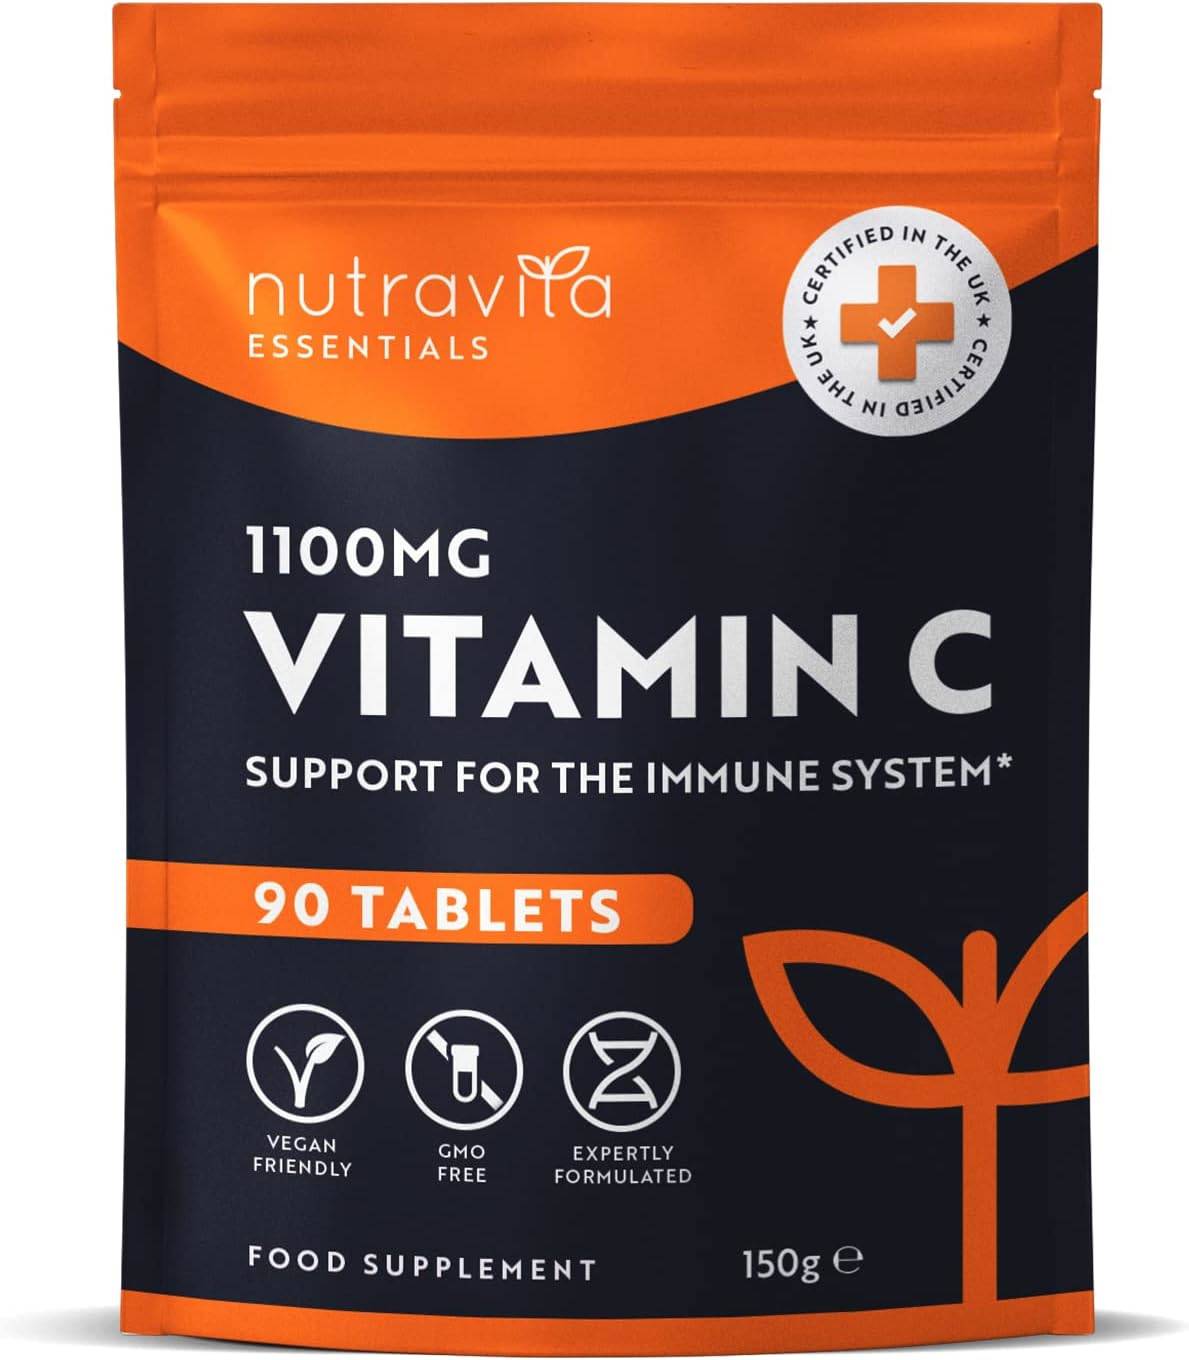 Nutravita - Vitamin C 1100Mg - 90 Vegan Tablets - 3 Month Supply